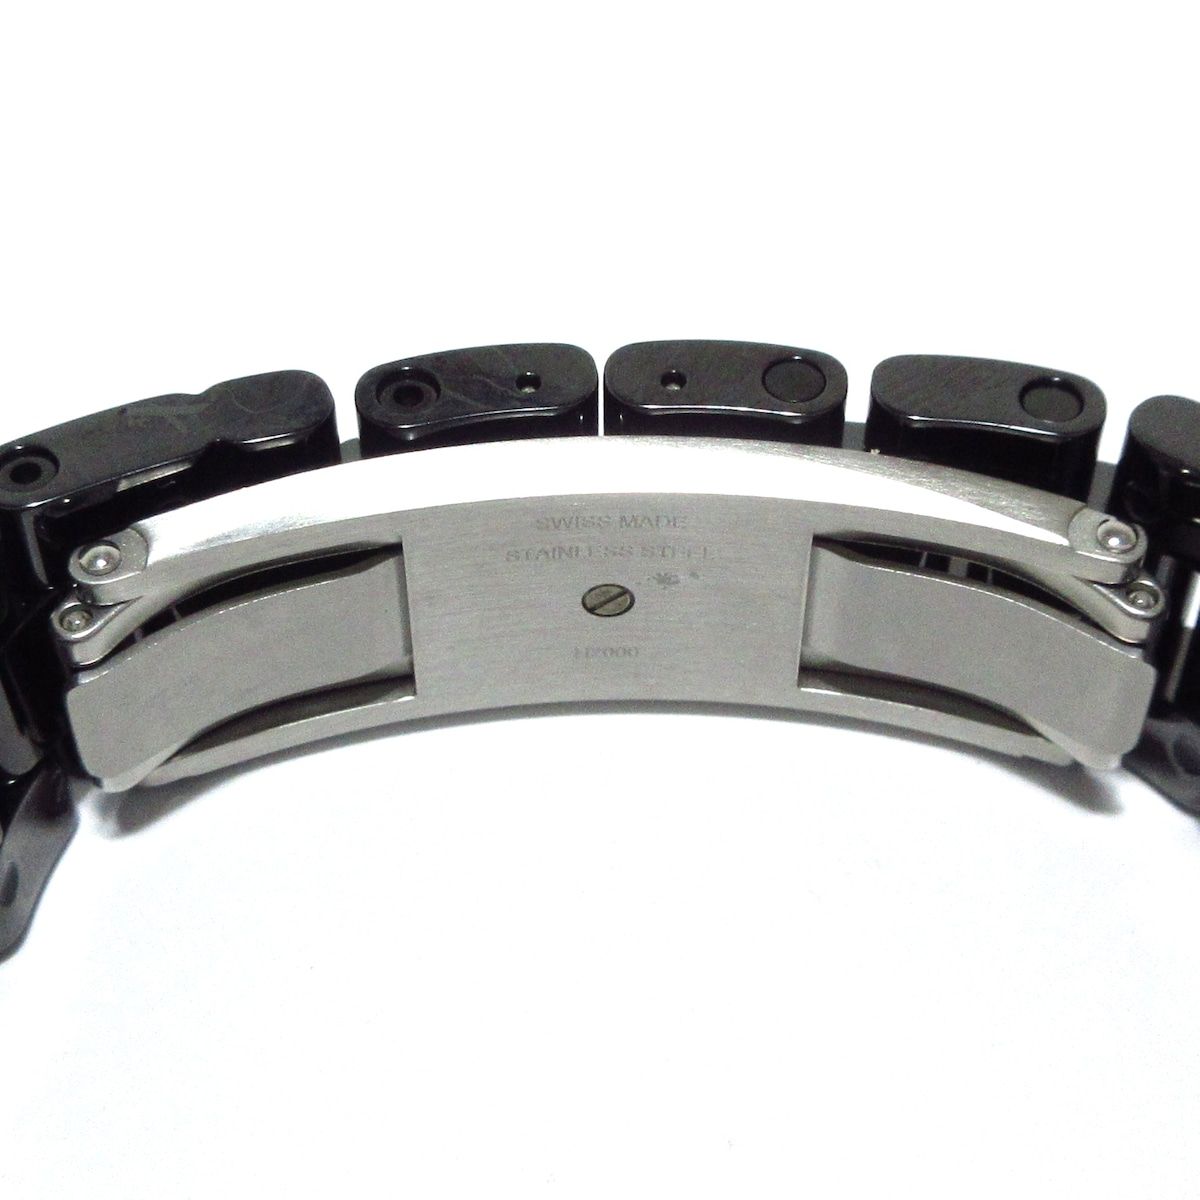 CHANEL(シャネル) 腕時計美品 J12 H1625 レディース 新型/セラミック/12Pダイヤインデックス/33mm 黒 - メルカリ